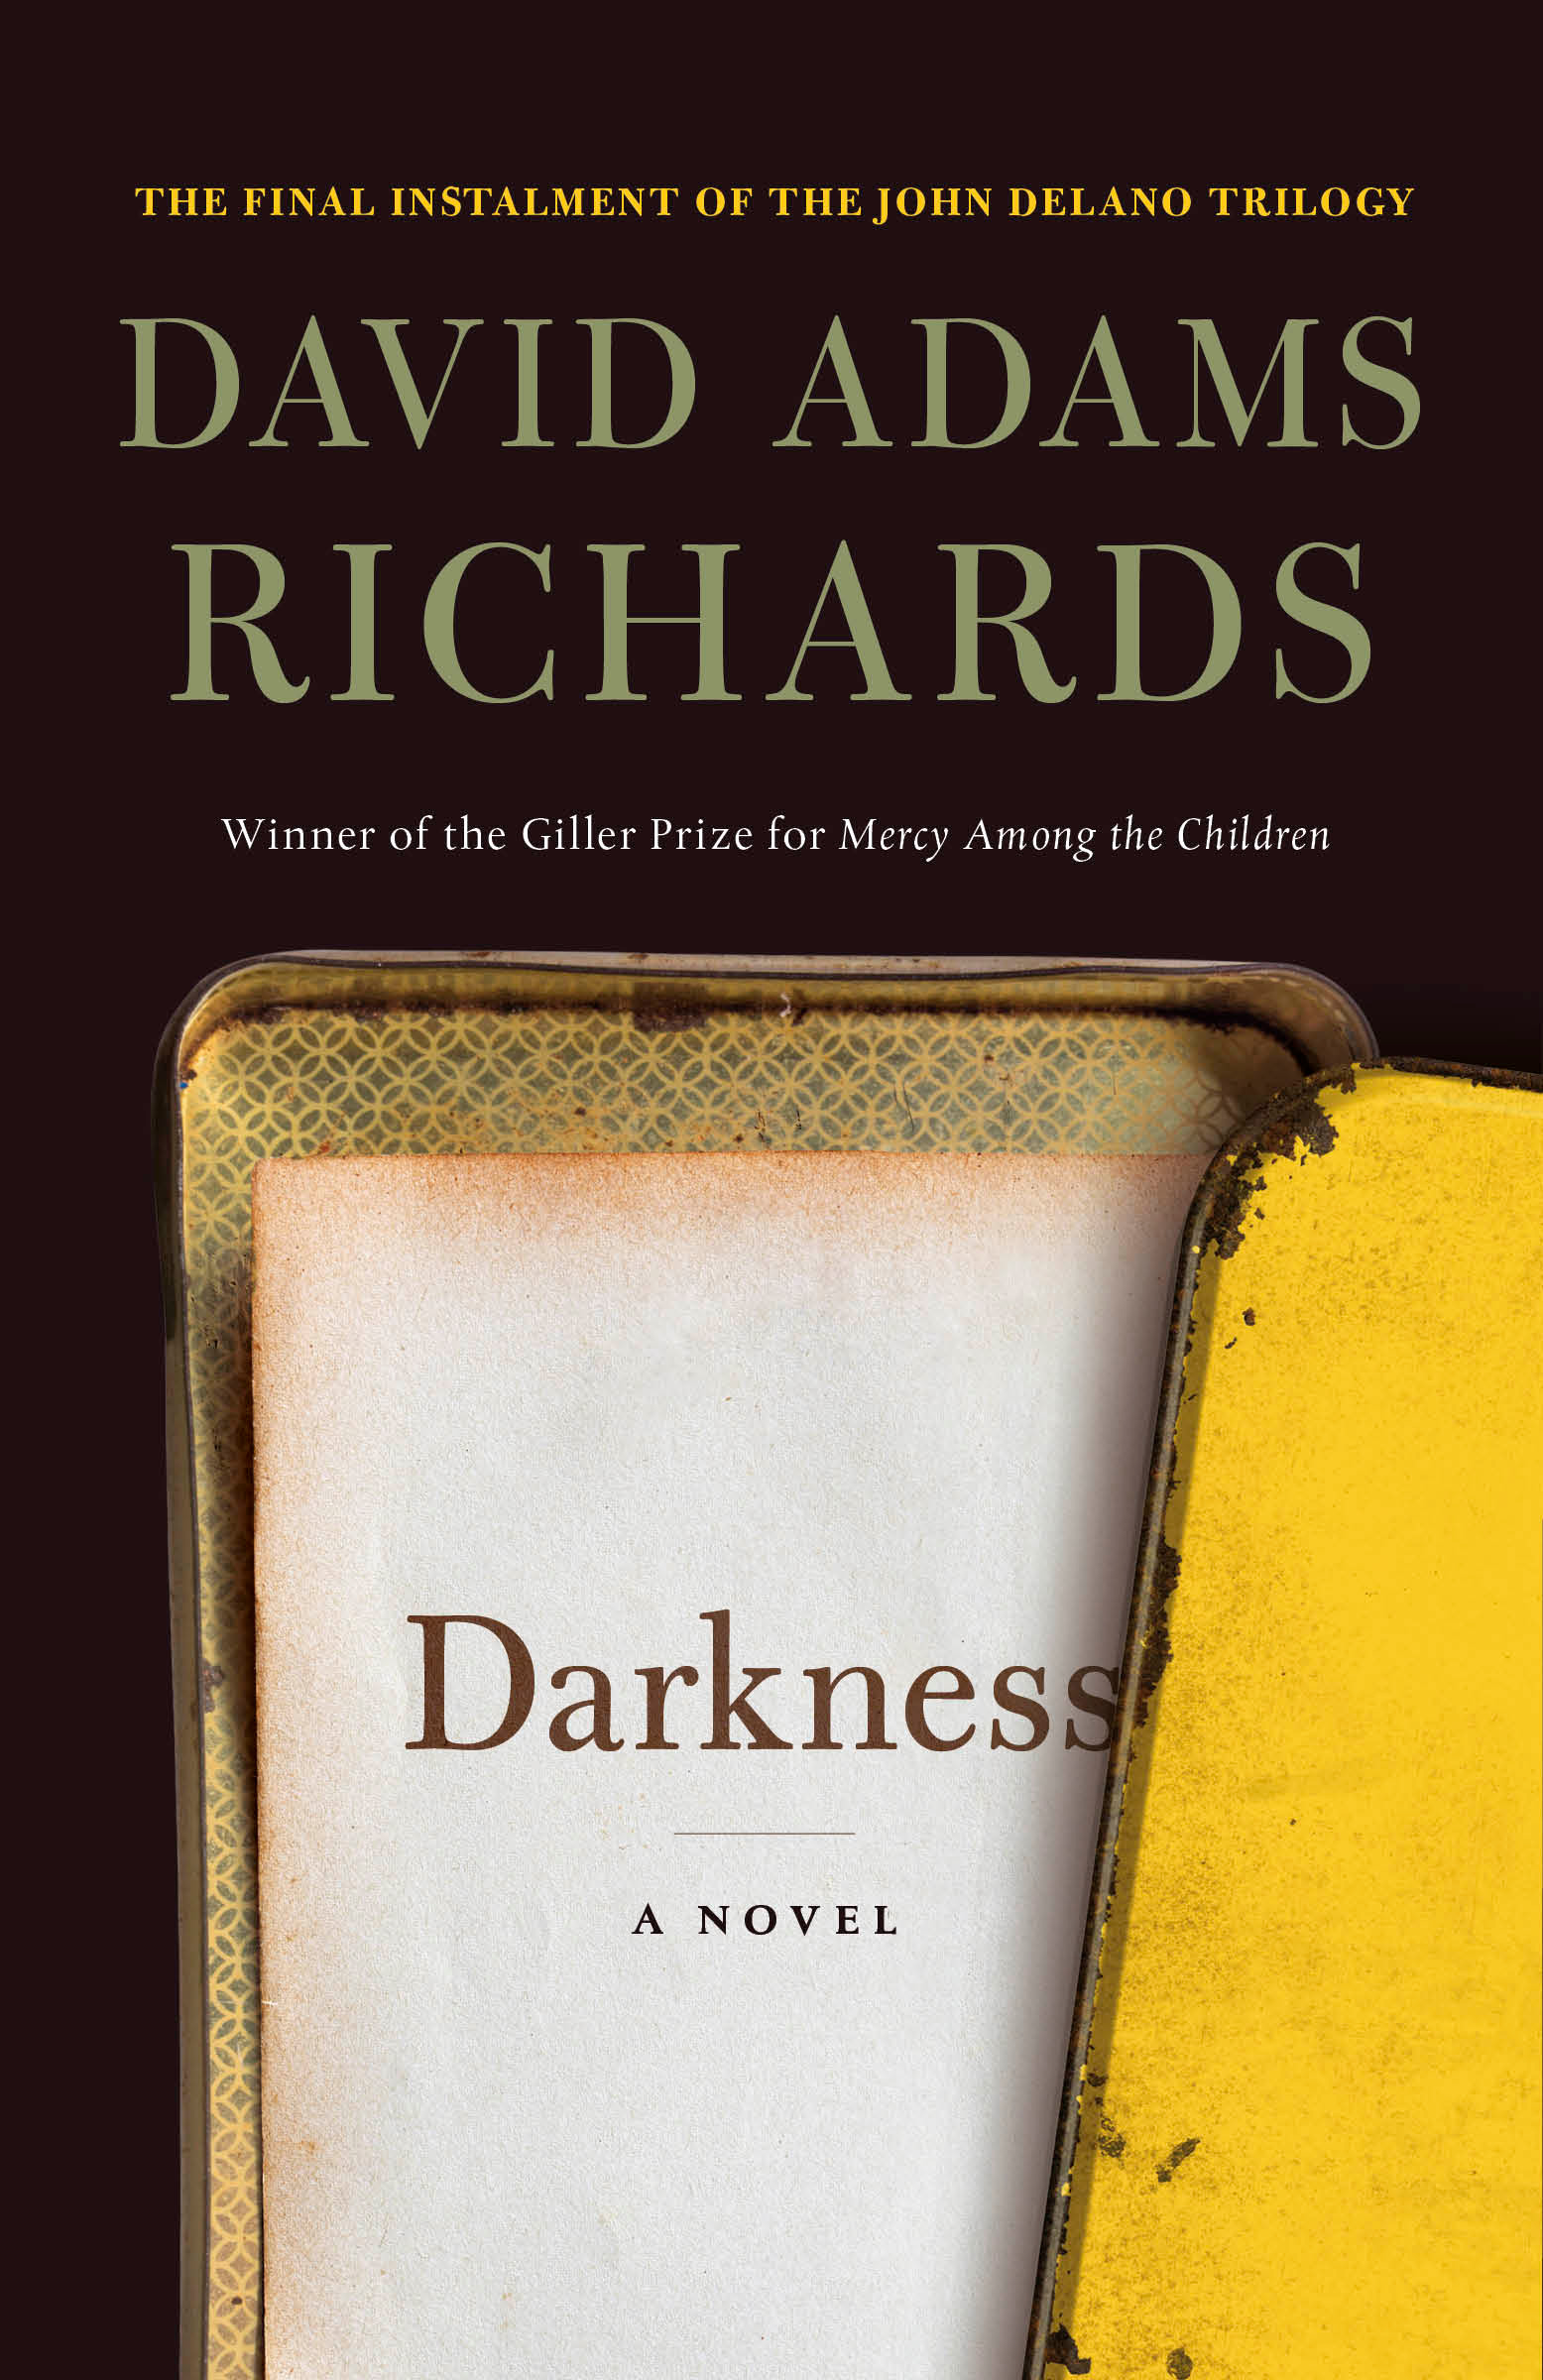 Darkness | Novel